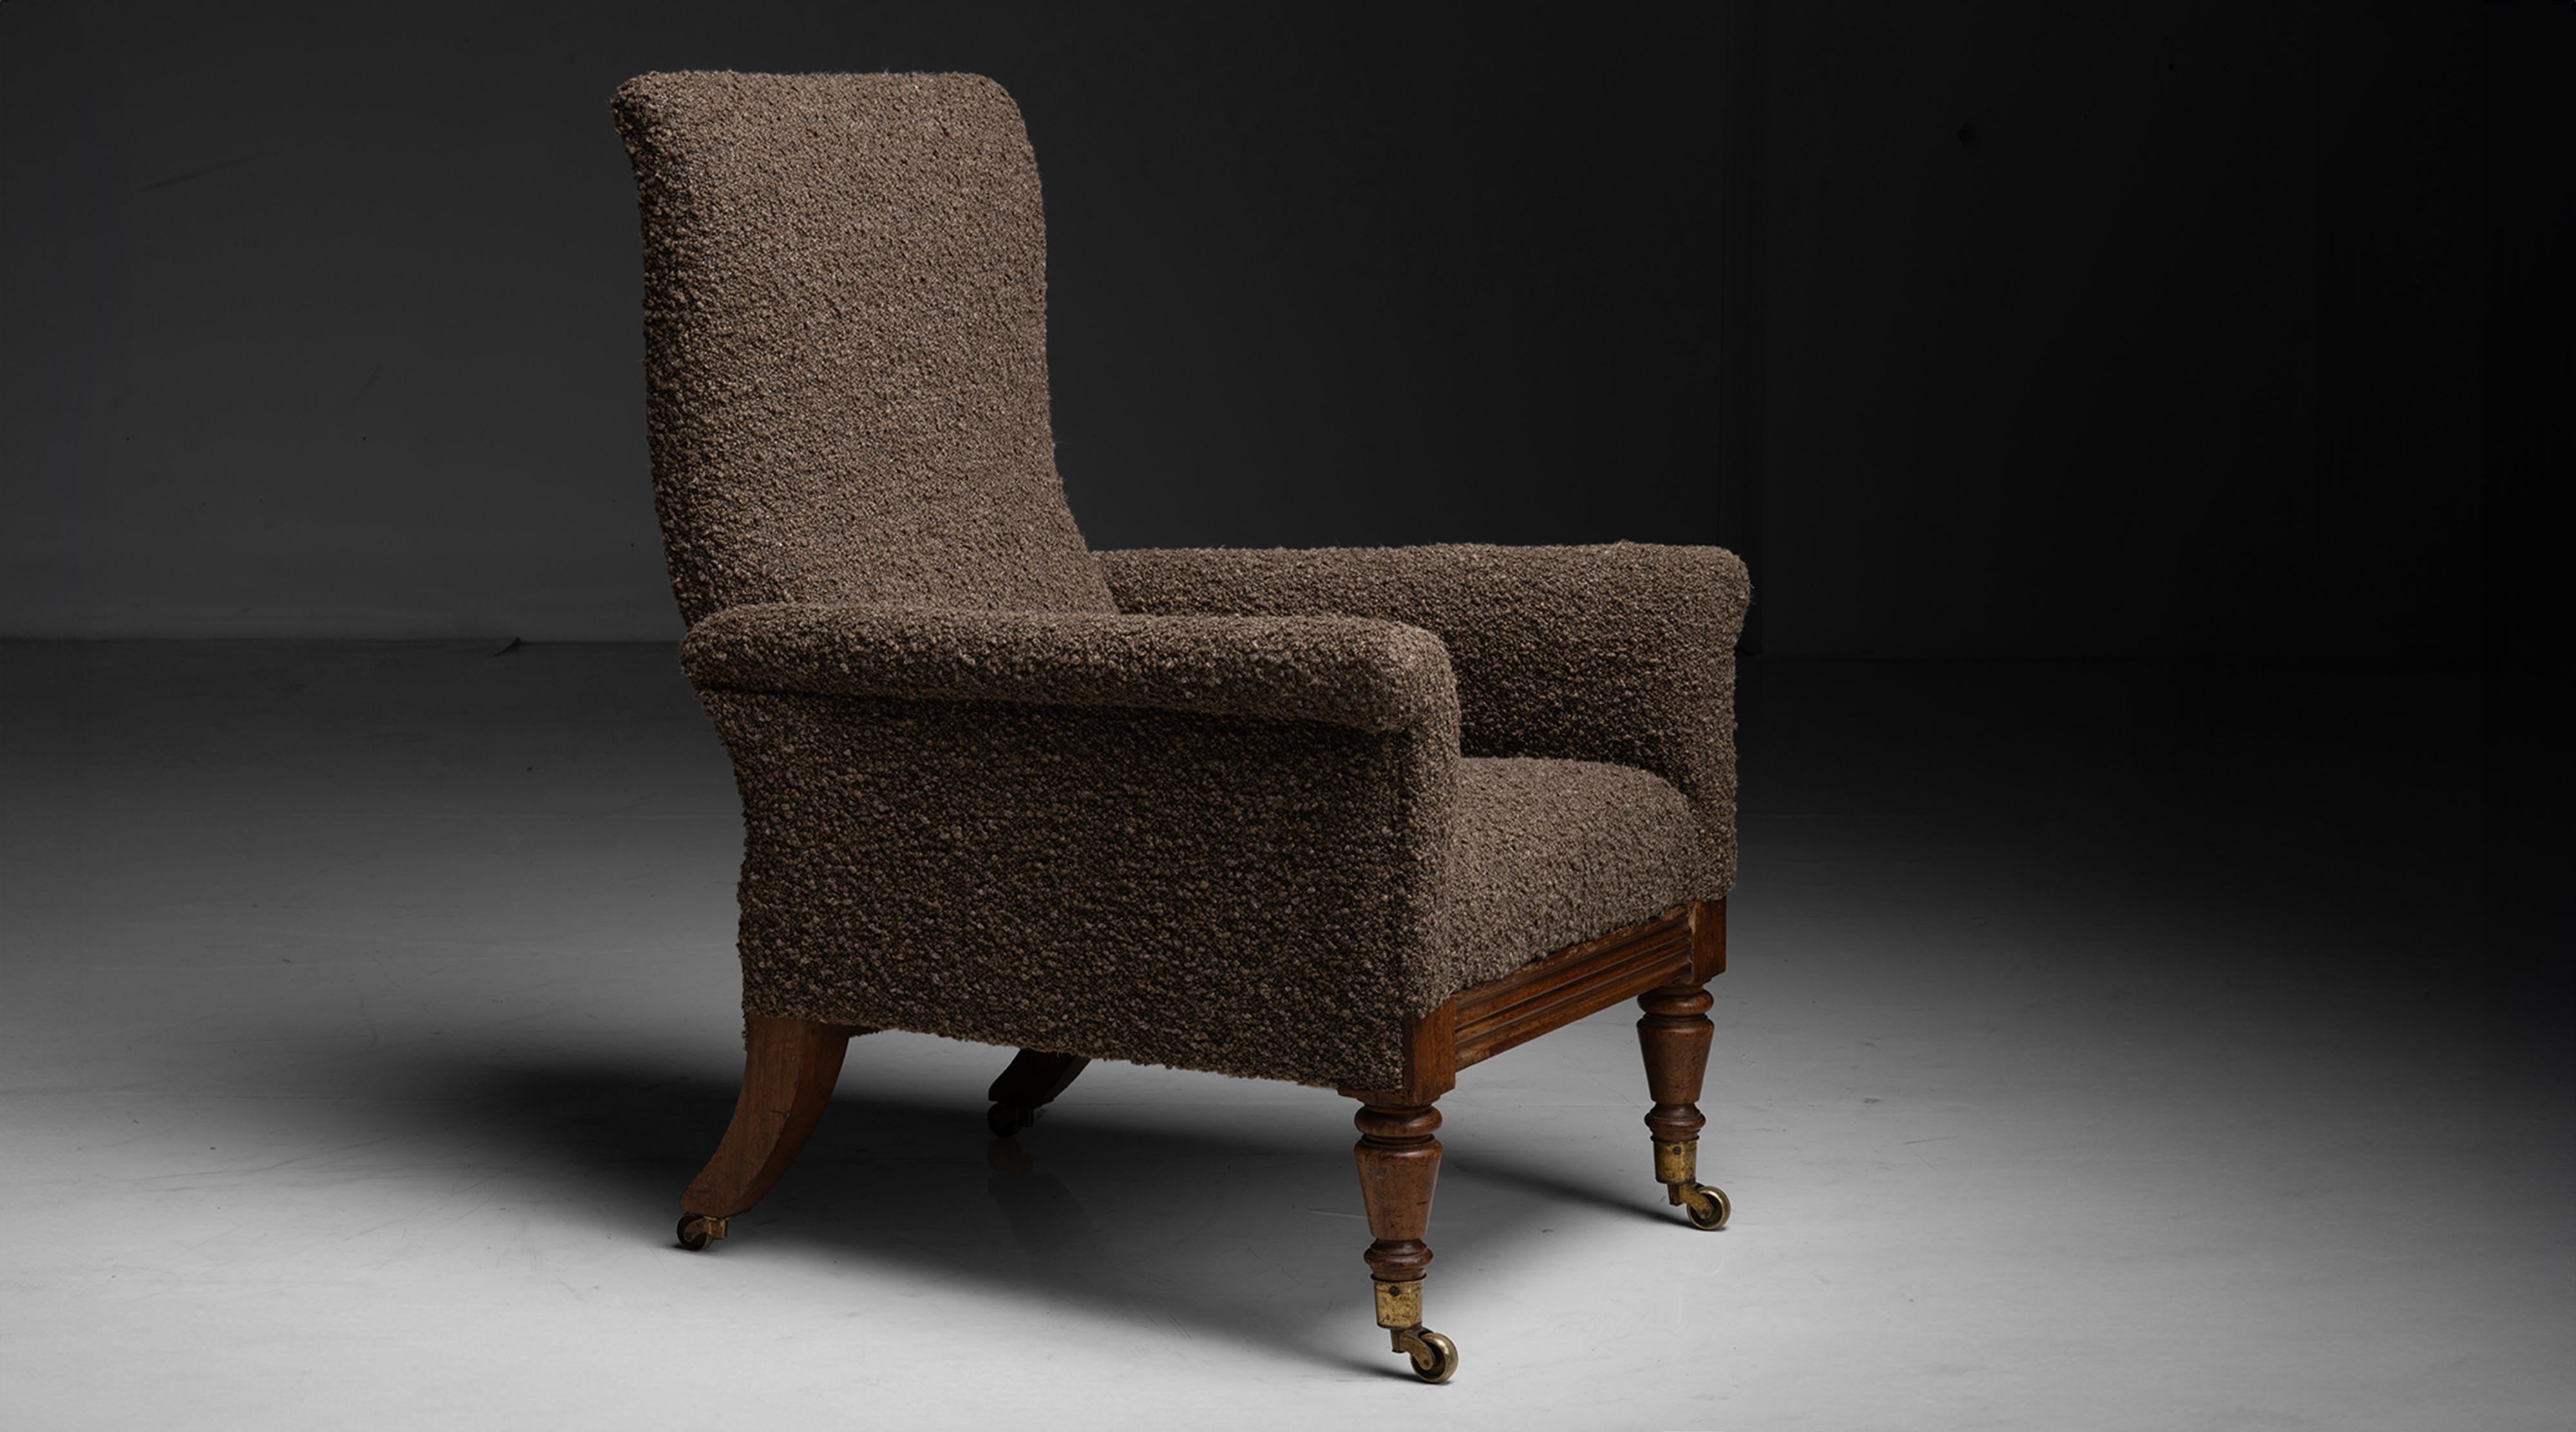 England circa 1830
Antique frame, reupholstered in de Le Cuona wool / linen blend.
27